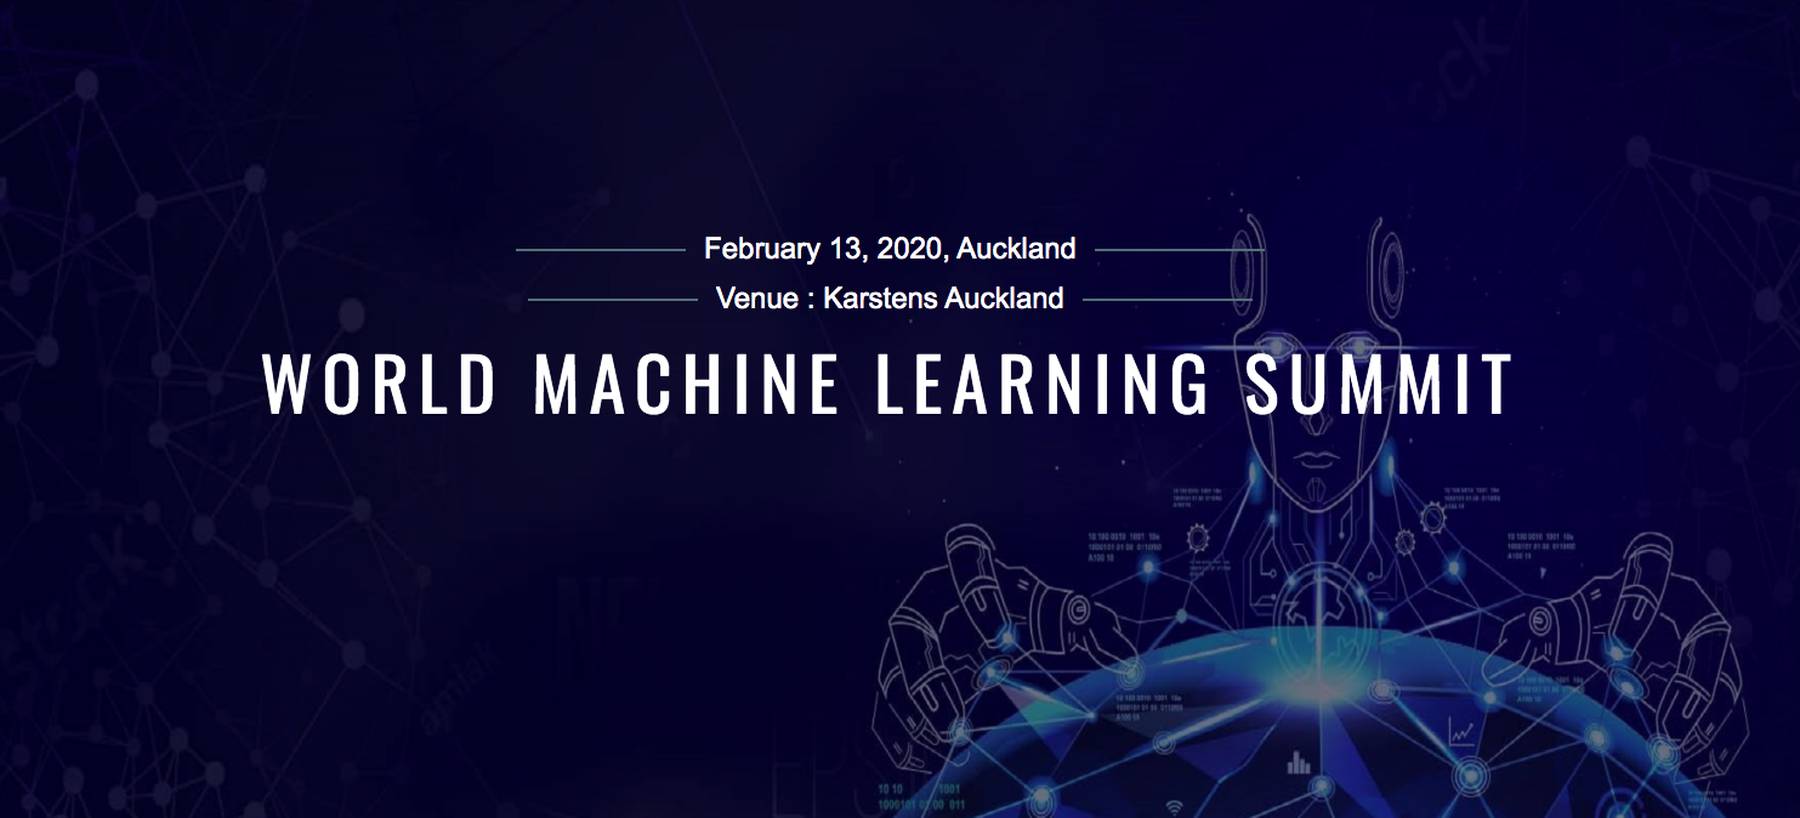 World Machine Learning Summit Auckland 2020